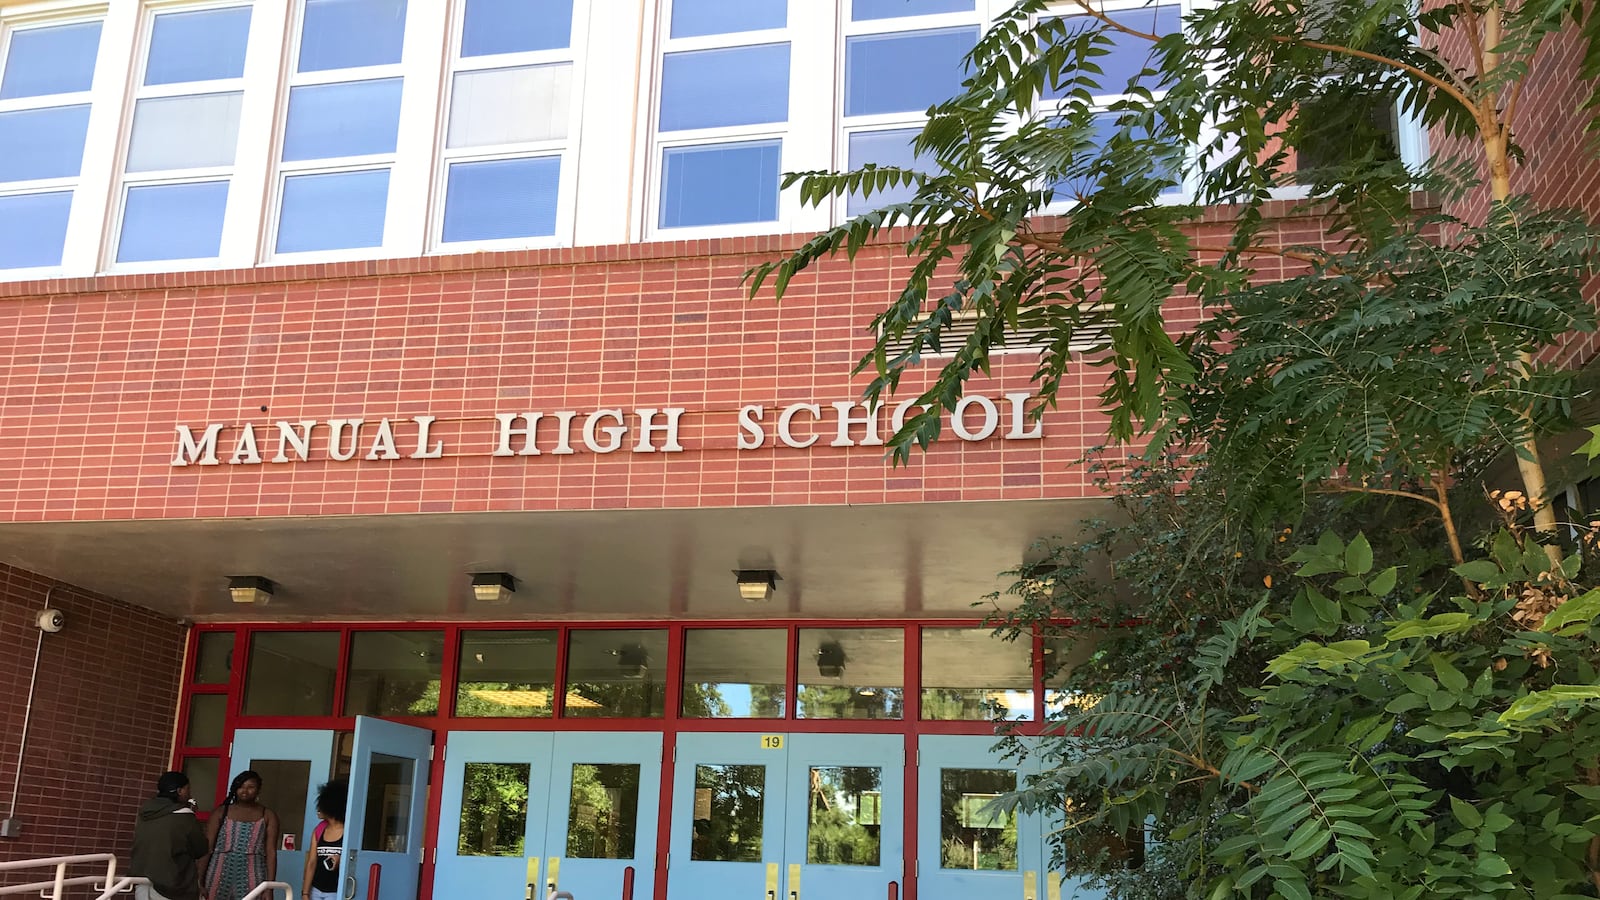 Denver's Manual High School